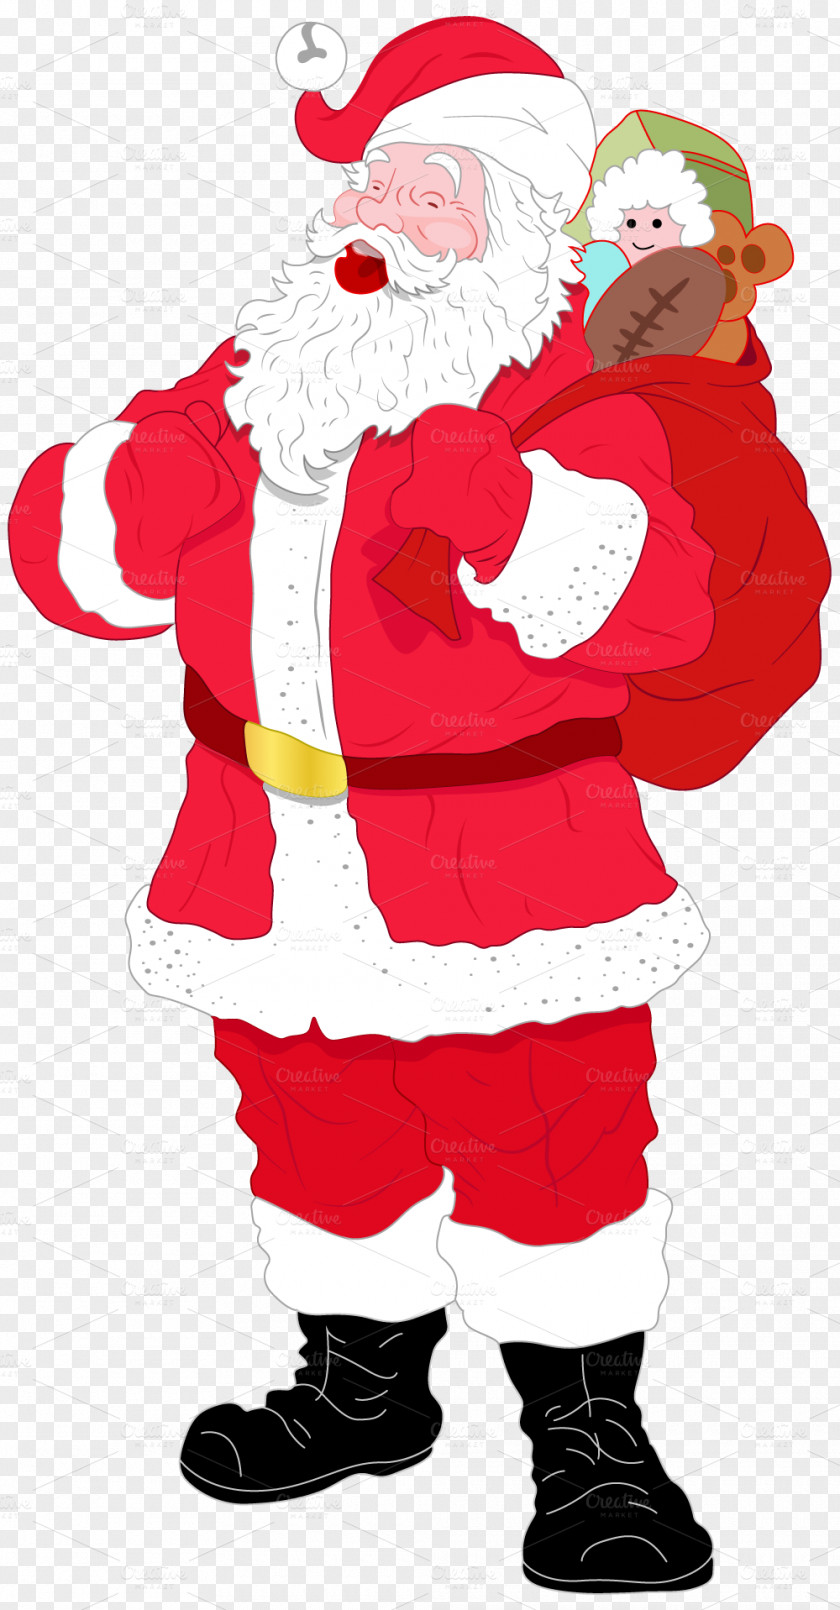 Santa Claus Vector Graphics Illustration IStock PNG